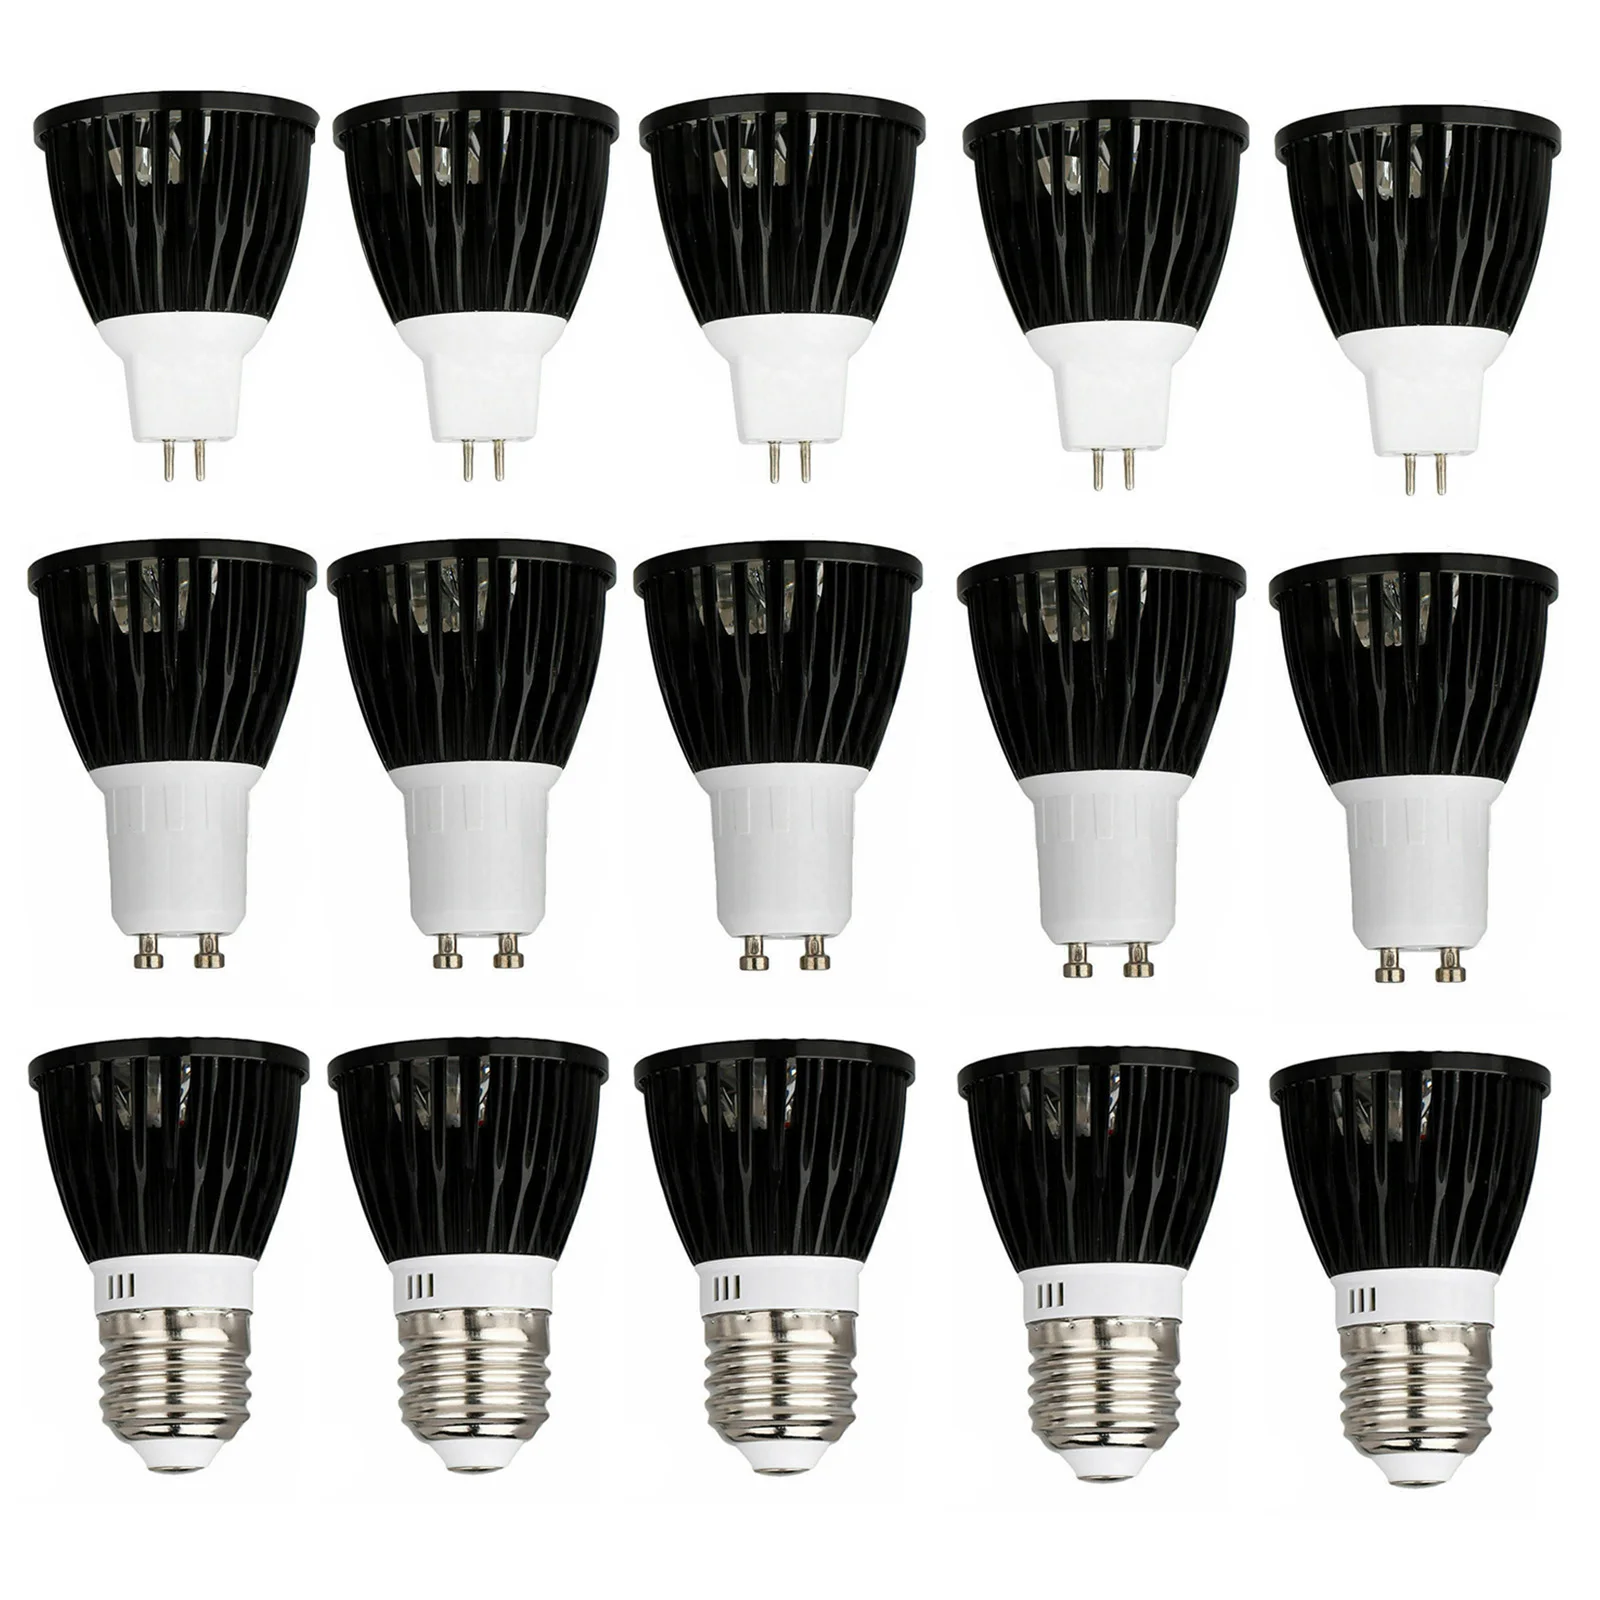 

5Pcs Dimmable LED Lampada 9W 12W 15W GU10 MR16 GU5.3 E27 E14 Bulb 110V 220V 12V Spotlight Red Blue Green Yellow Lamps